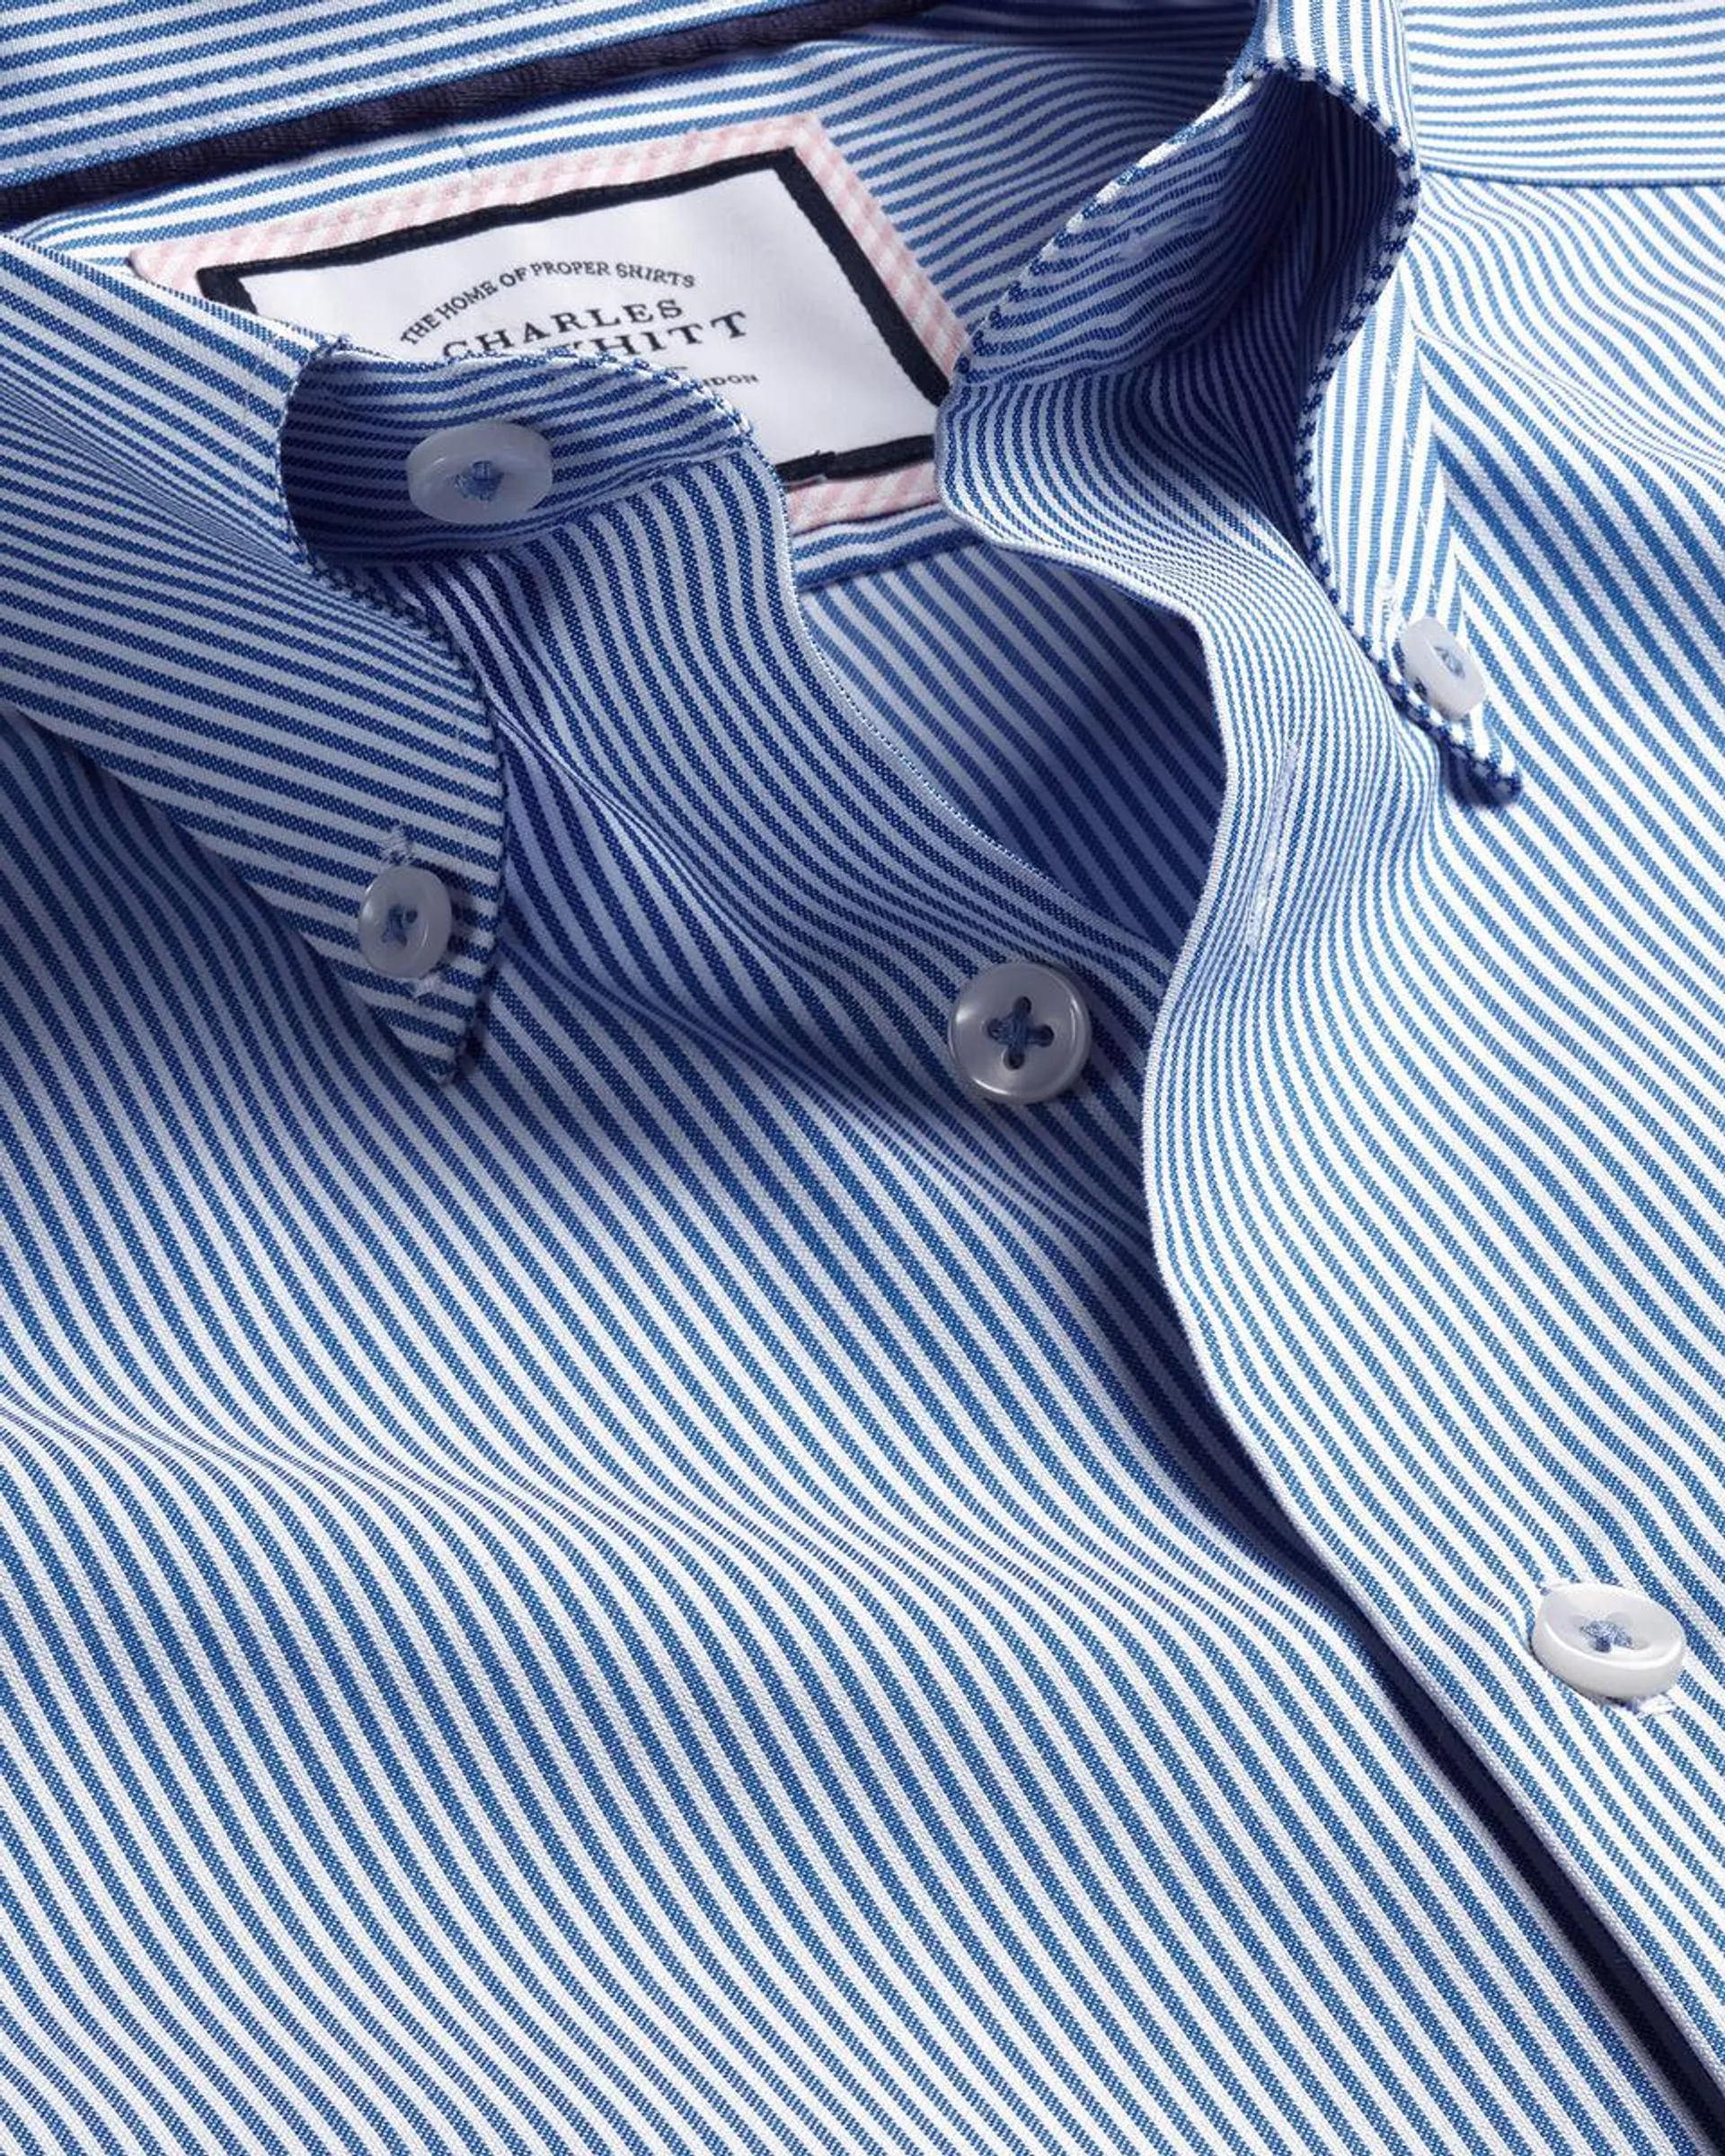 details about product: Button-Down Collar Non-Iron Stripe Shirt - Cobalt Blue